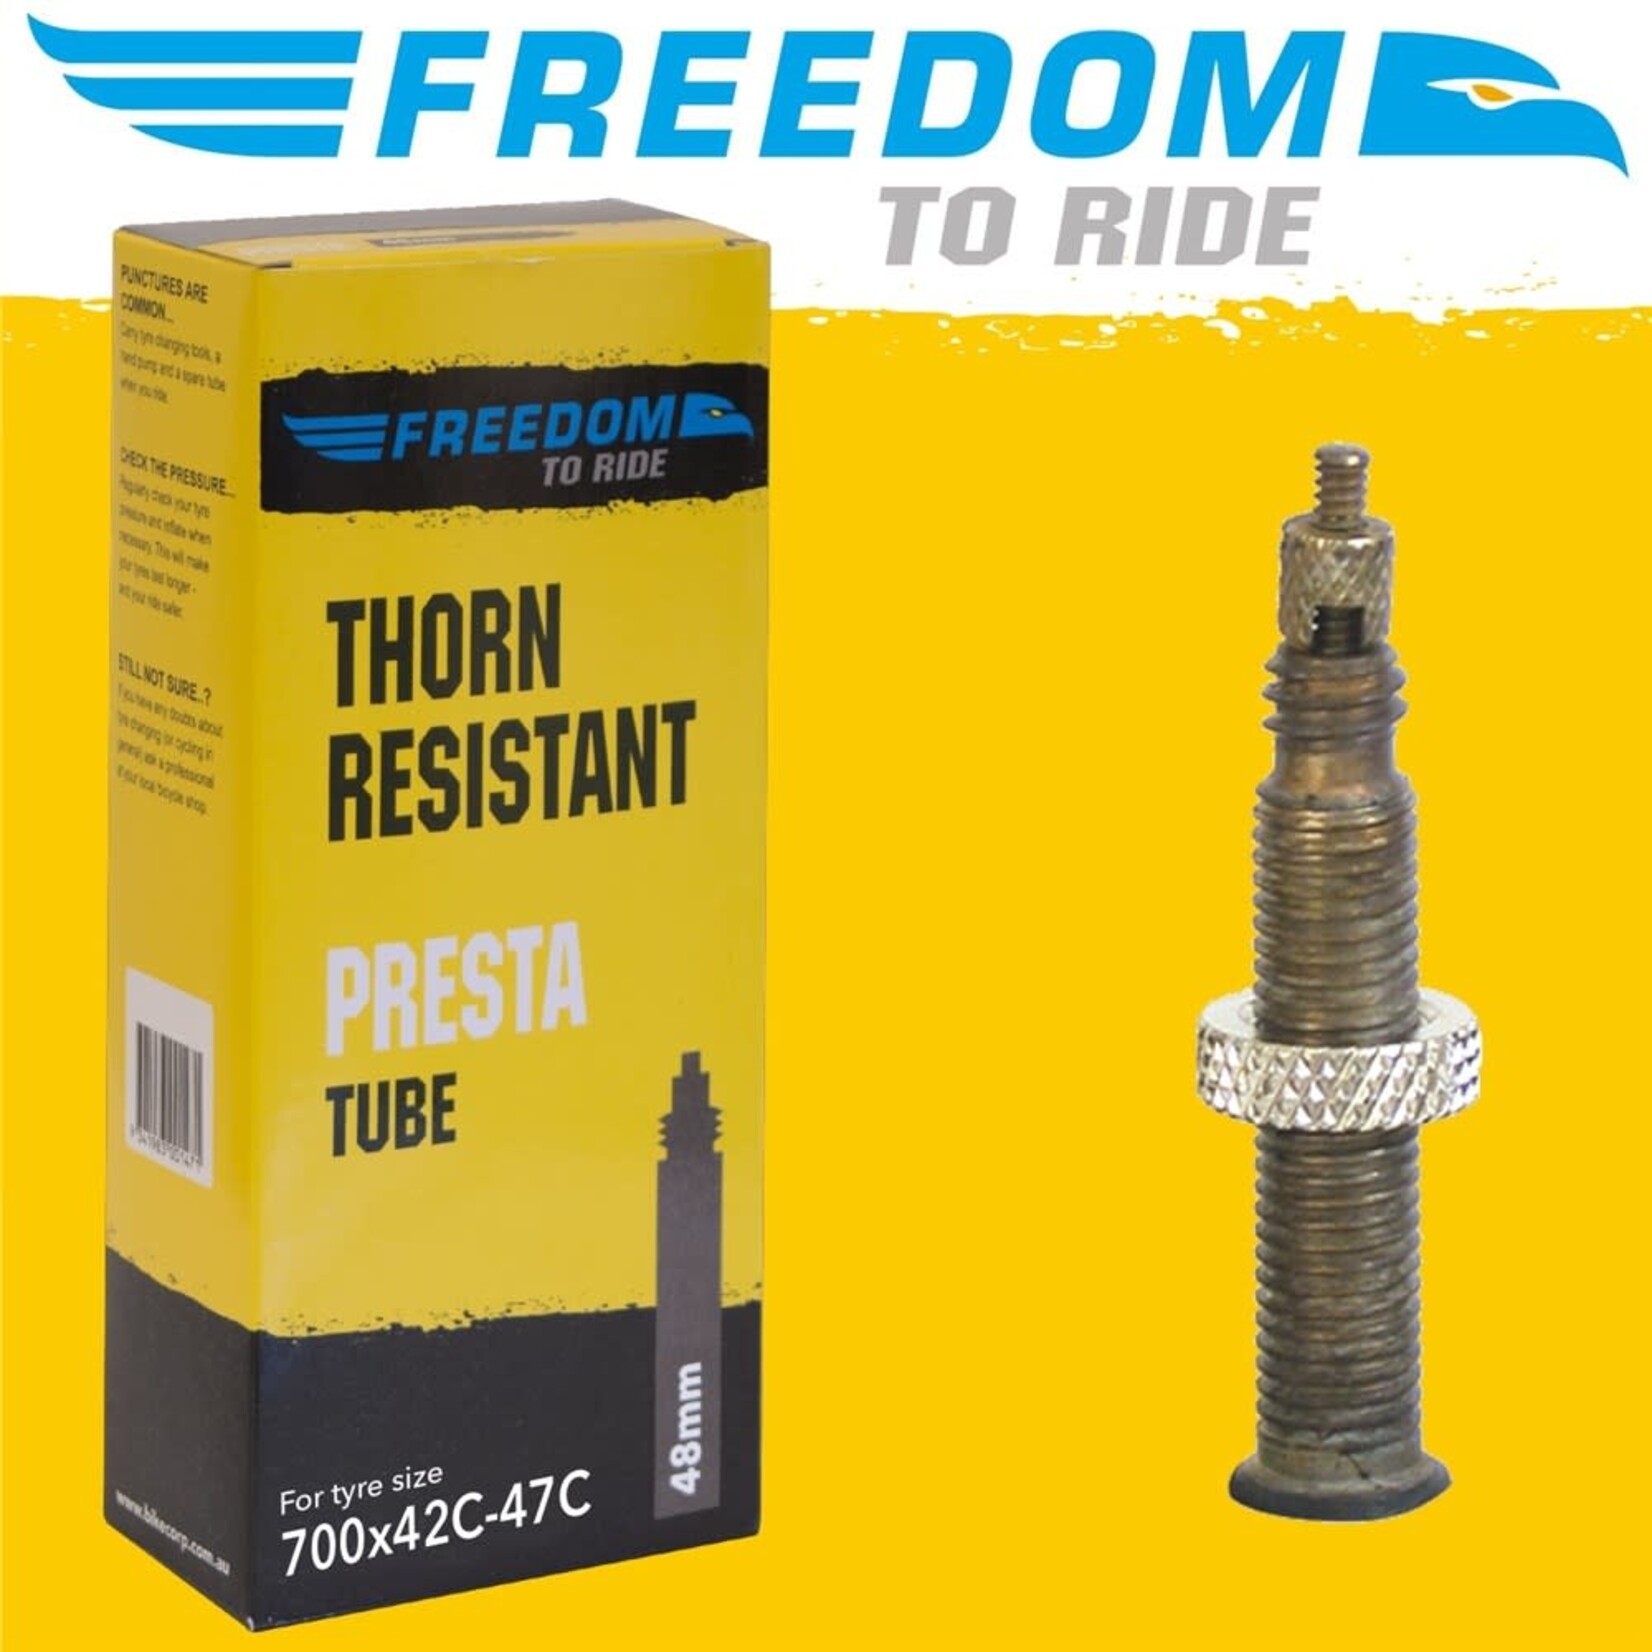 Freedom Thorn Resistant Presta Tube 700x42-47C (48mm valve)